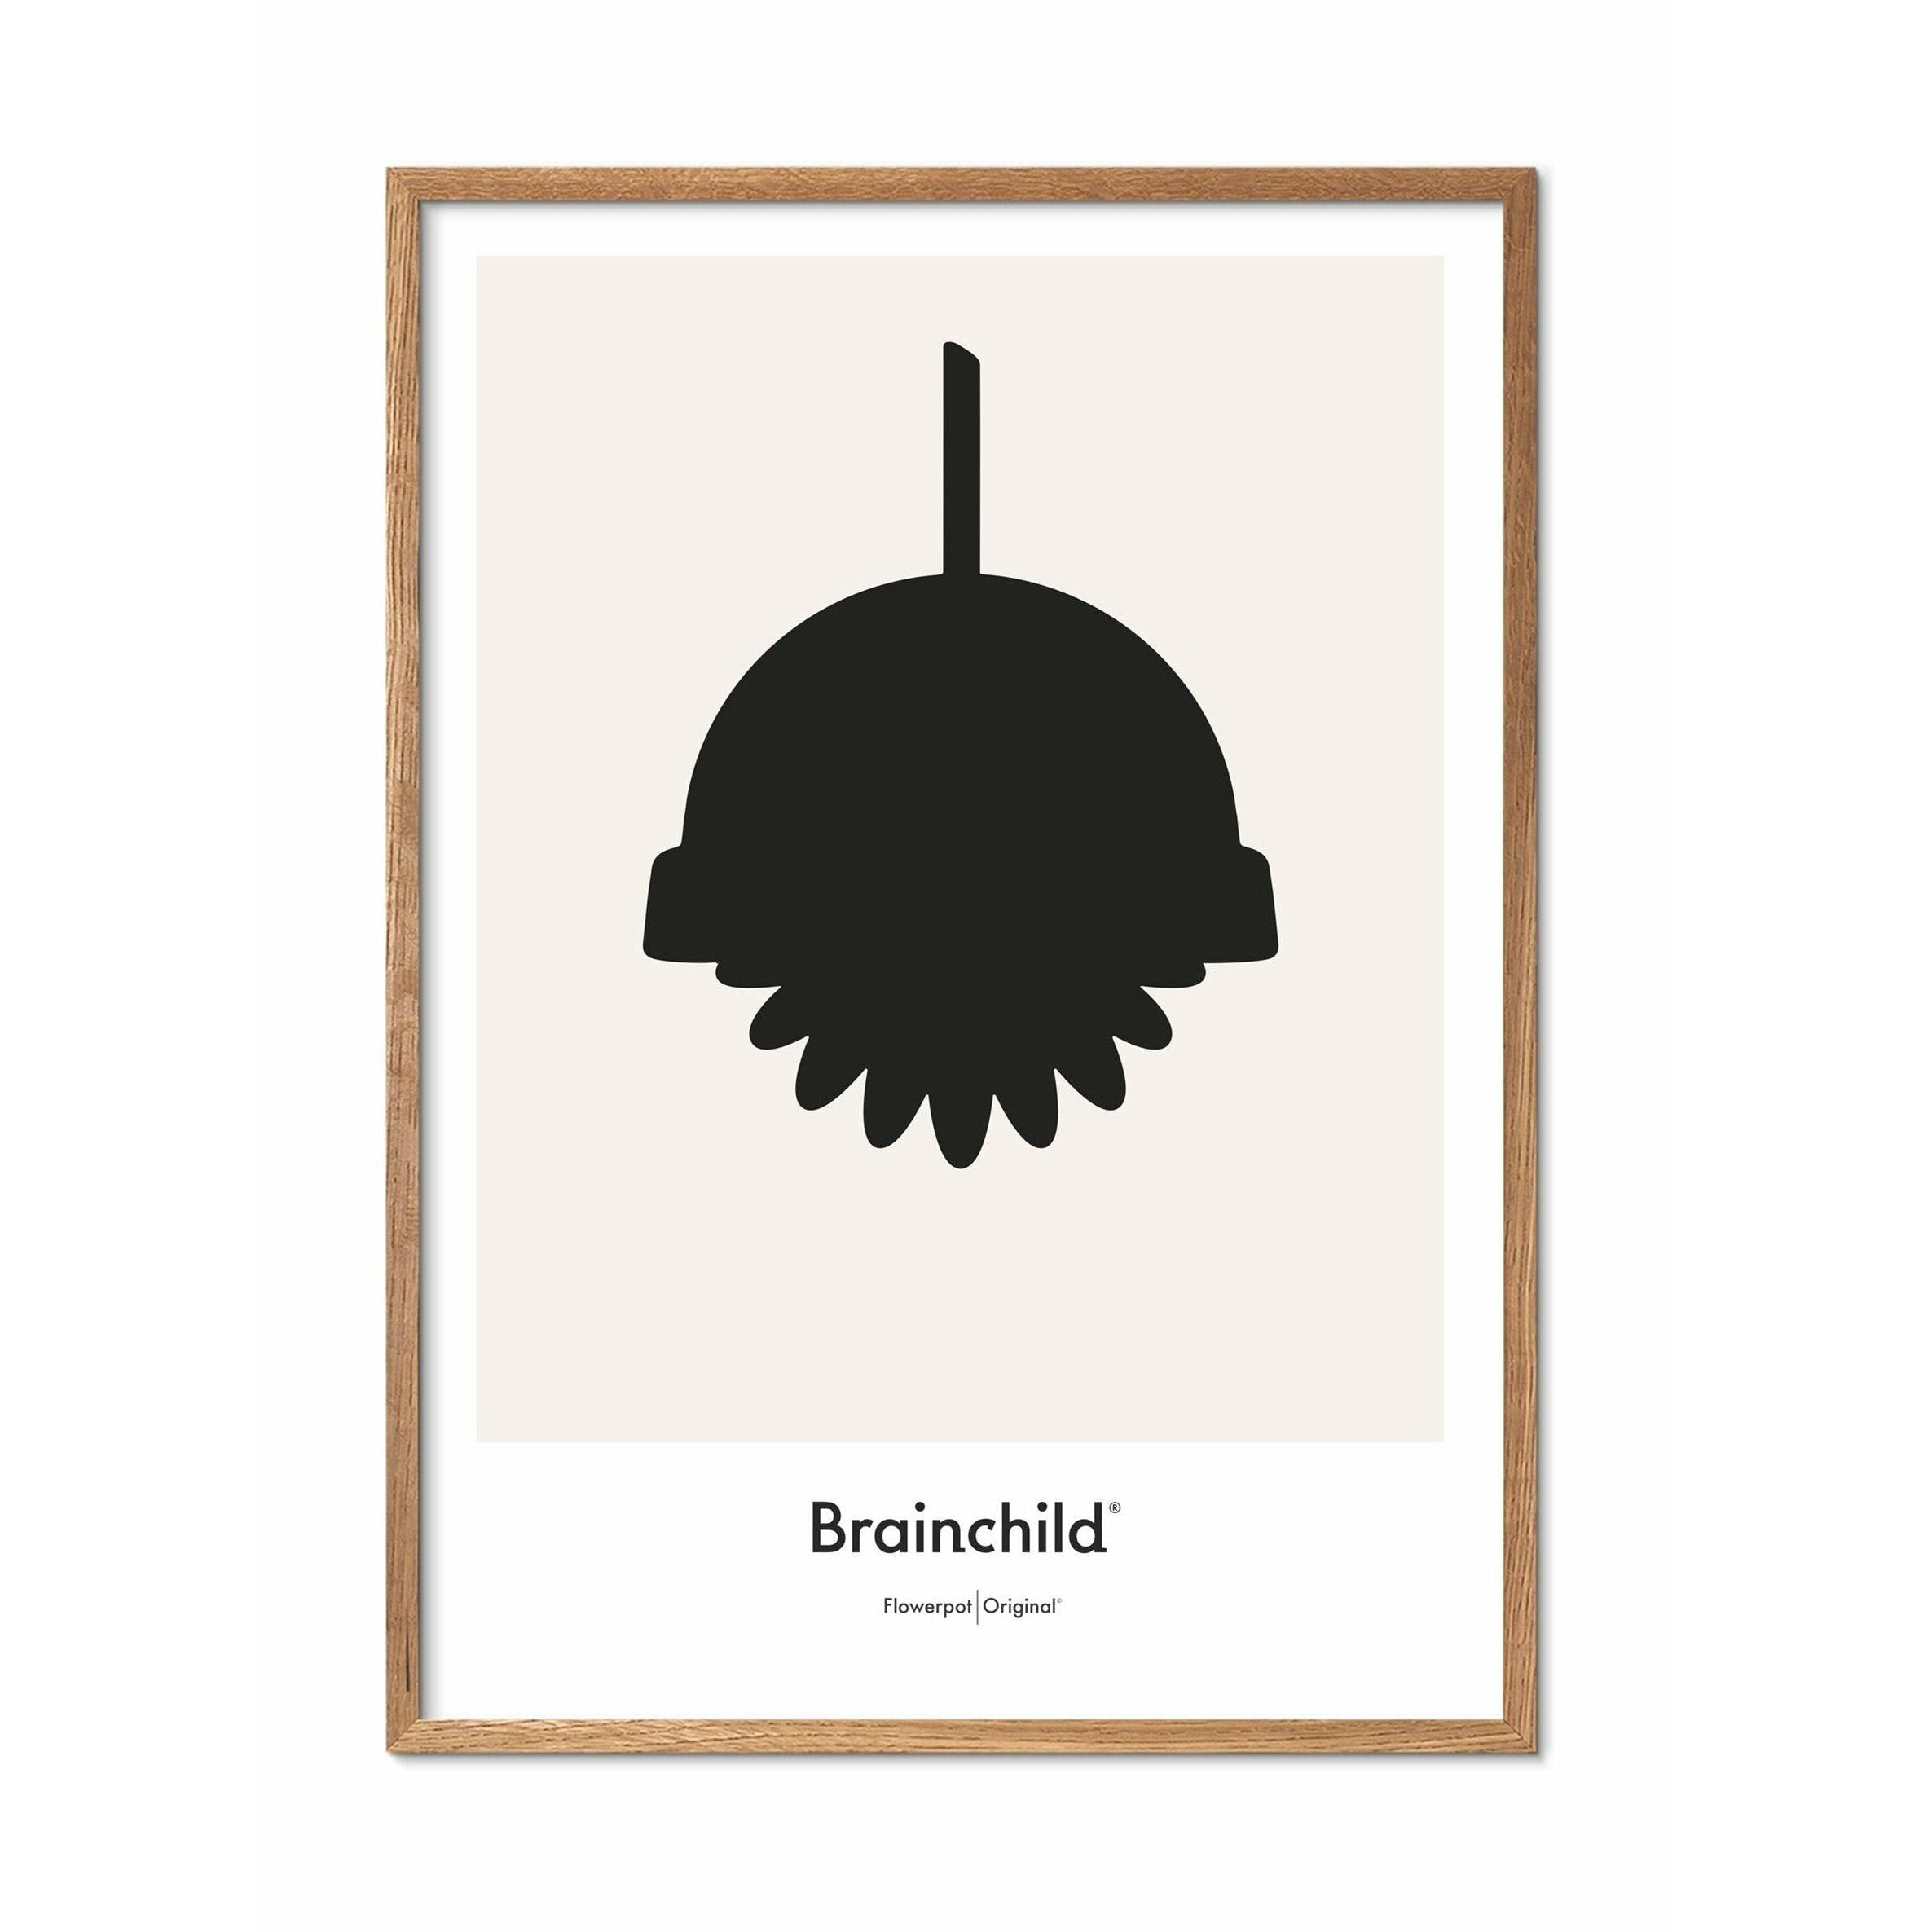 Brainchild Flowerpot Designikon Plakat, Ramme I Lyst Træ 70X100 Cm, Grå